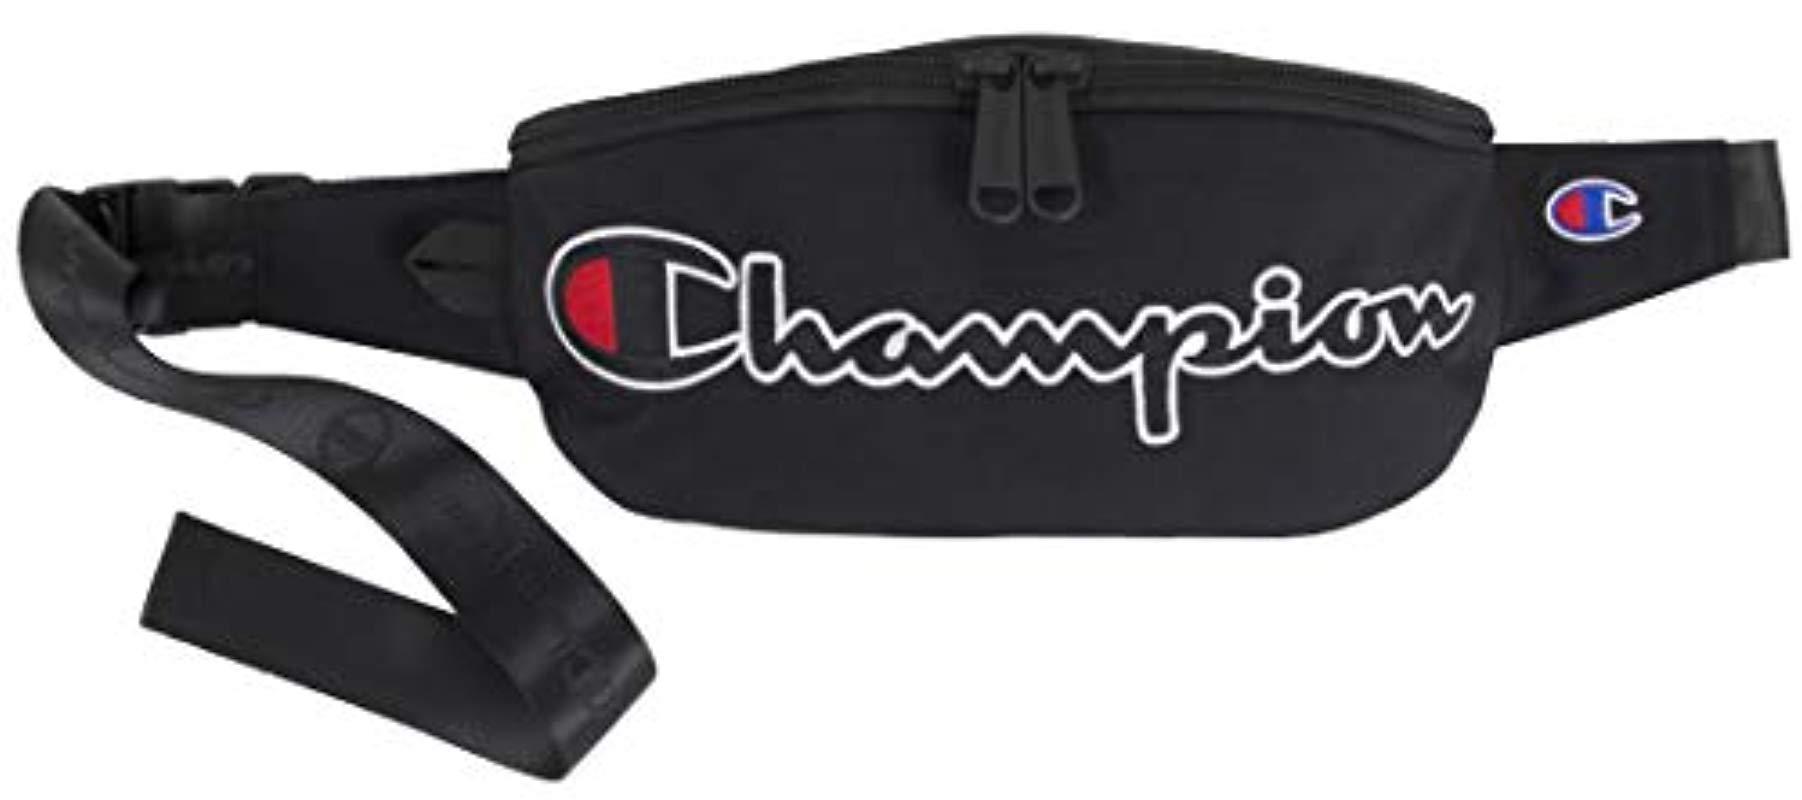 champion prime sling waist pack